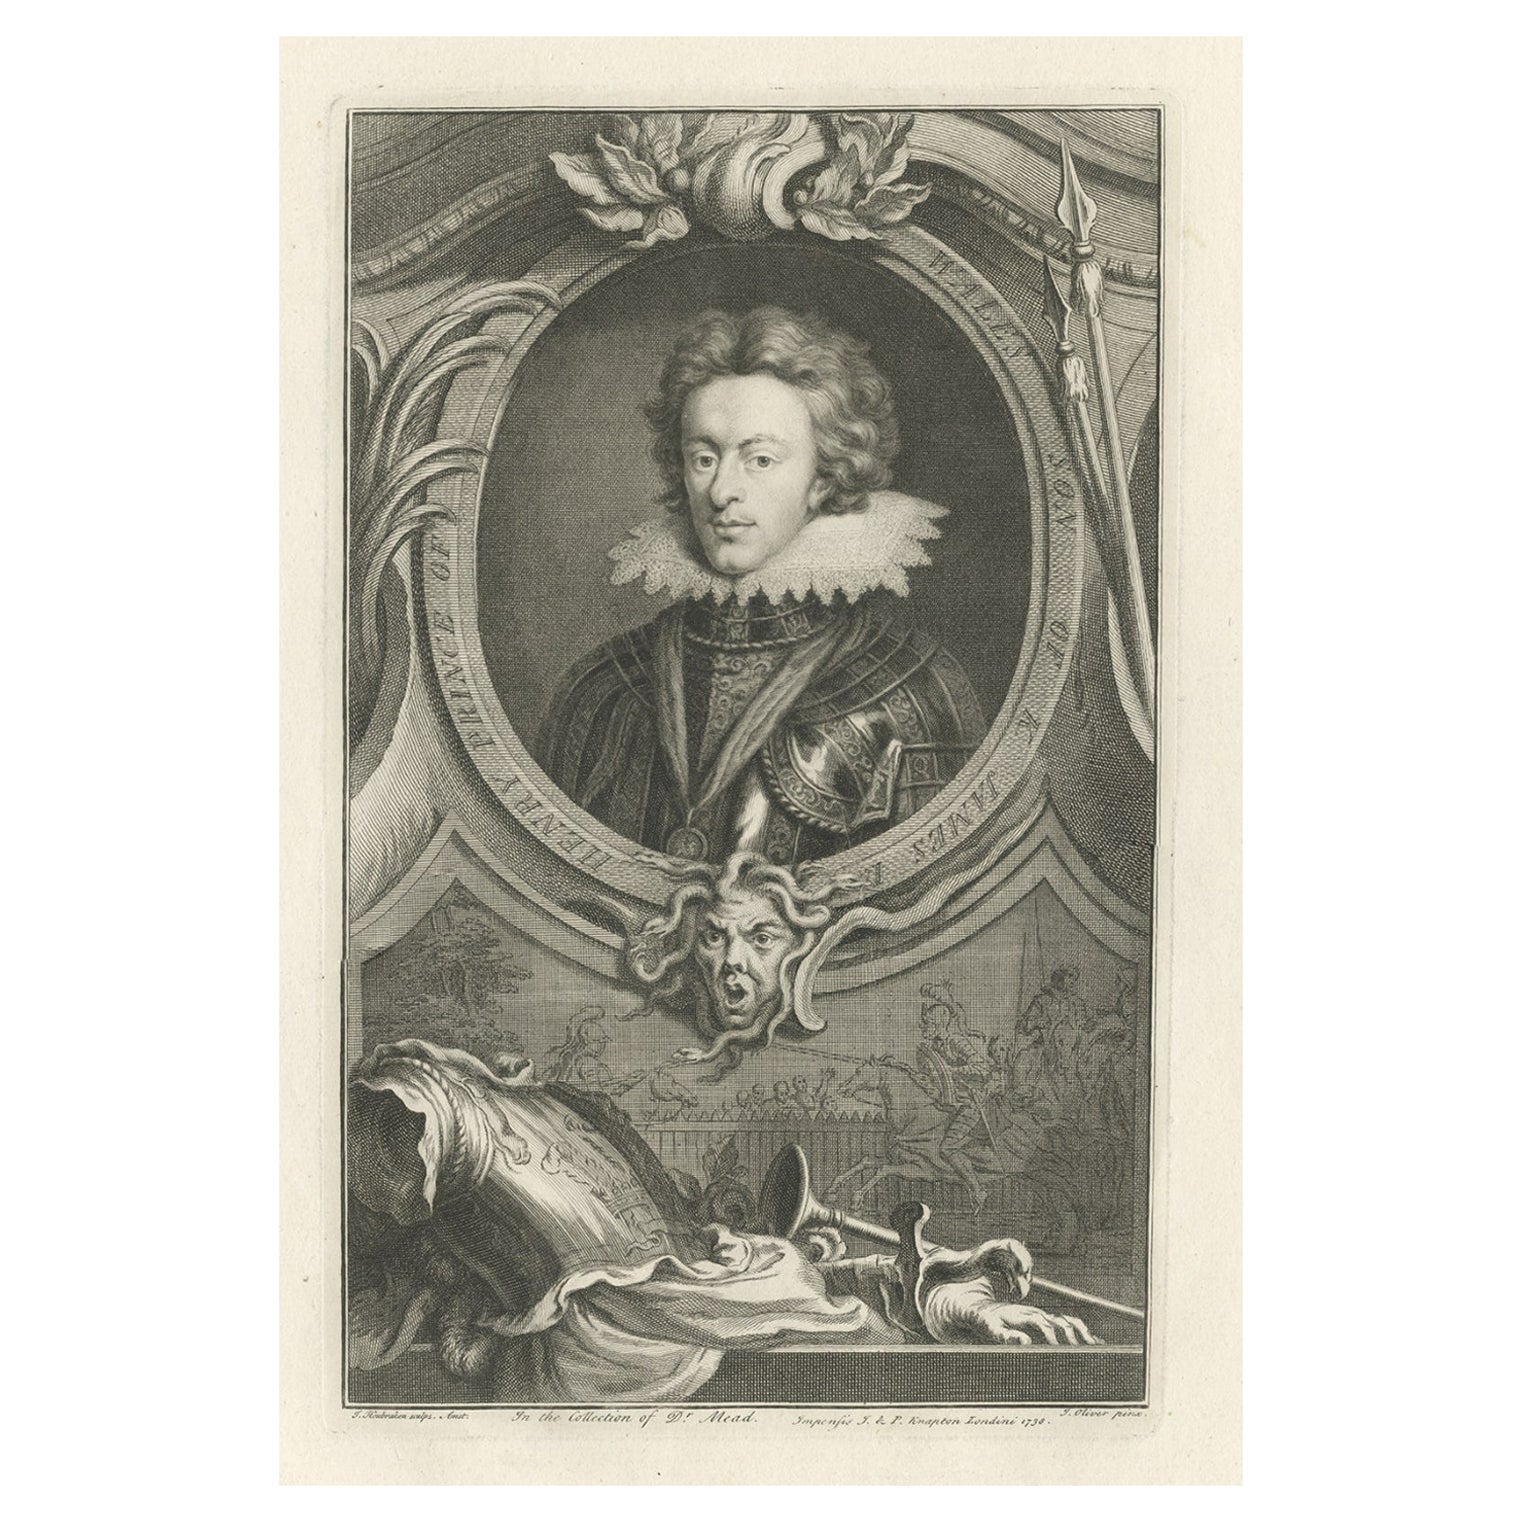 Altes Porträt von Henry Frederick, Prince of Wales, um 1750